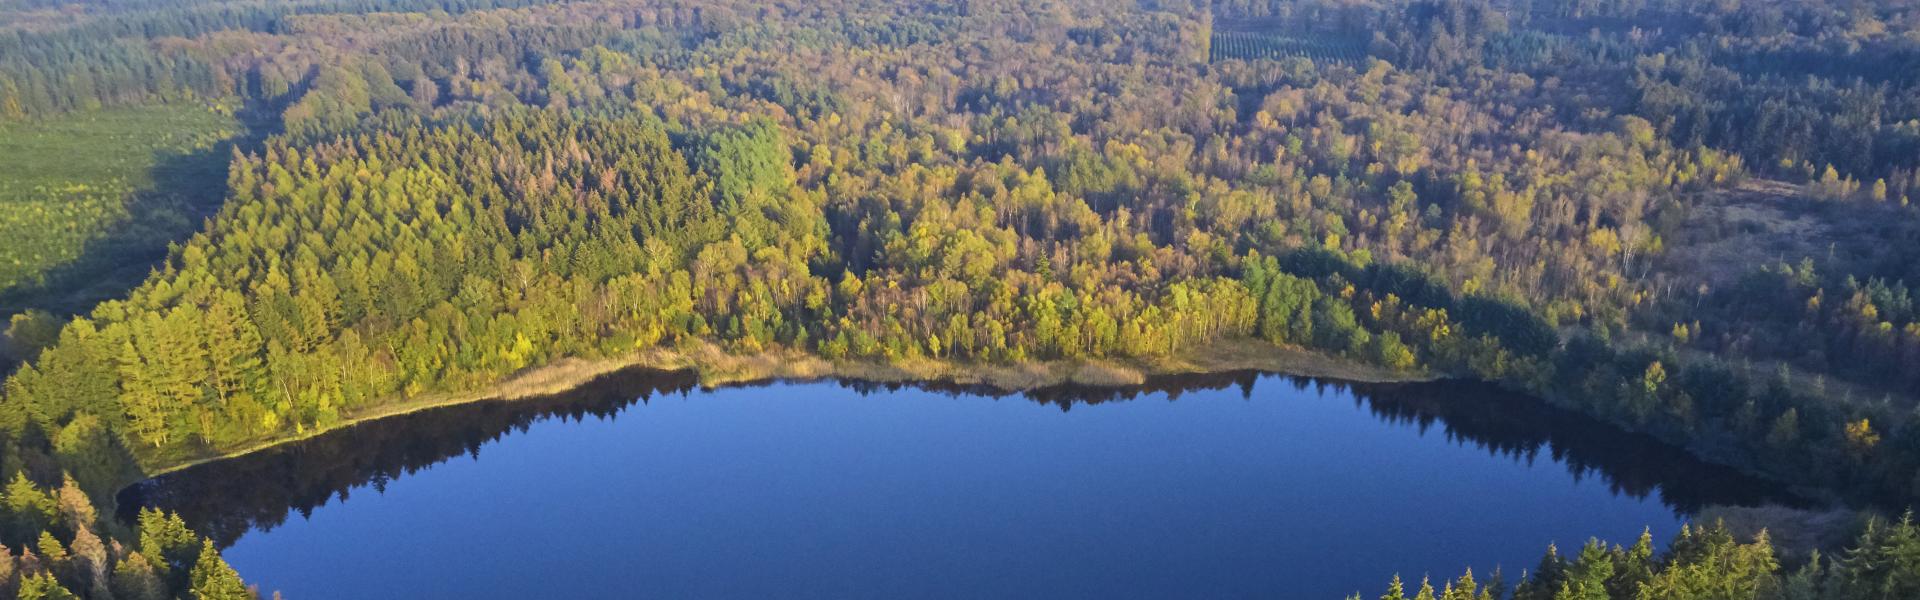 France, Burgundy, Nièvre (58), Morvan park, aerial view, lake